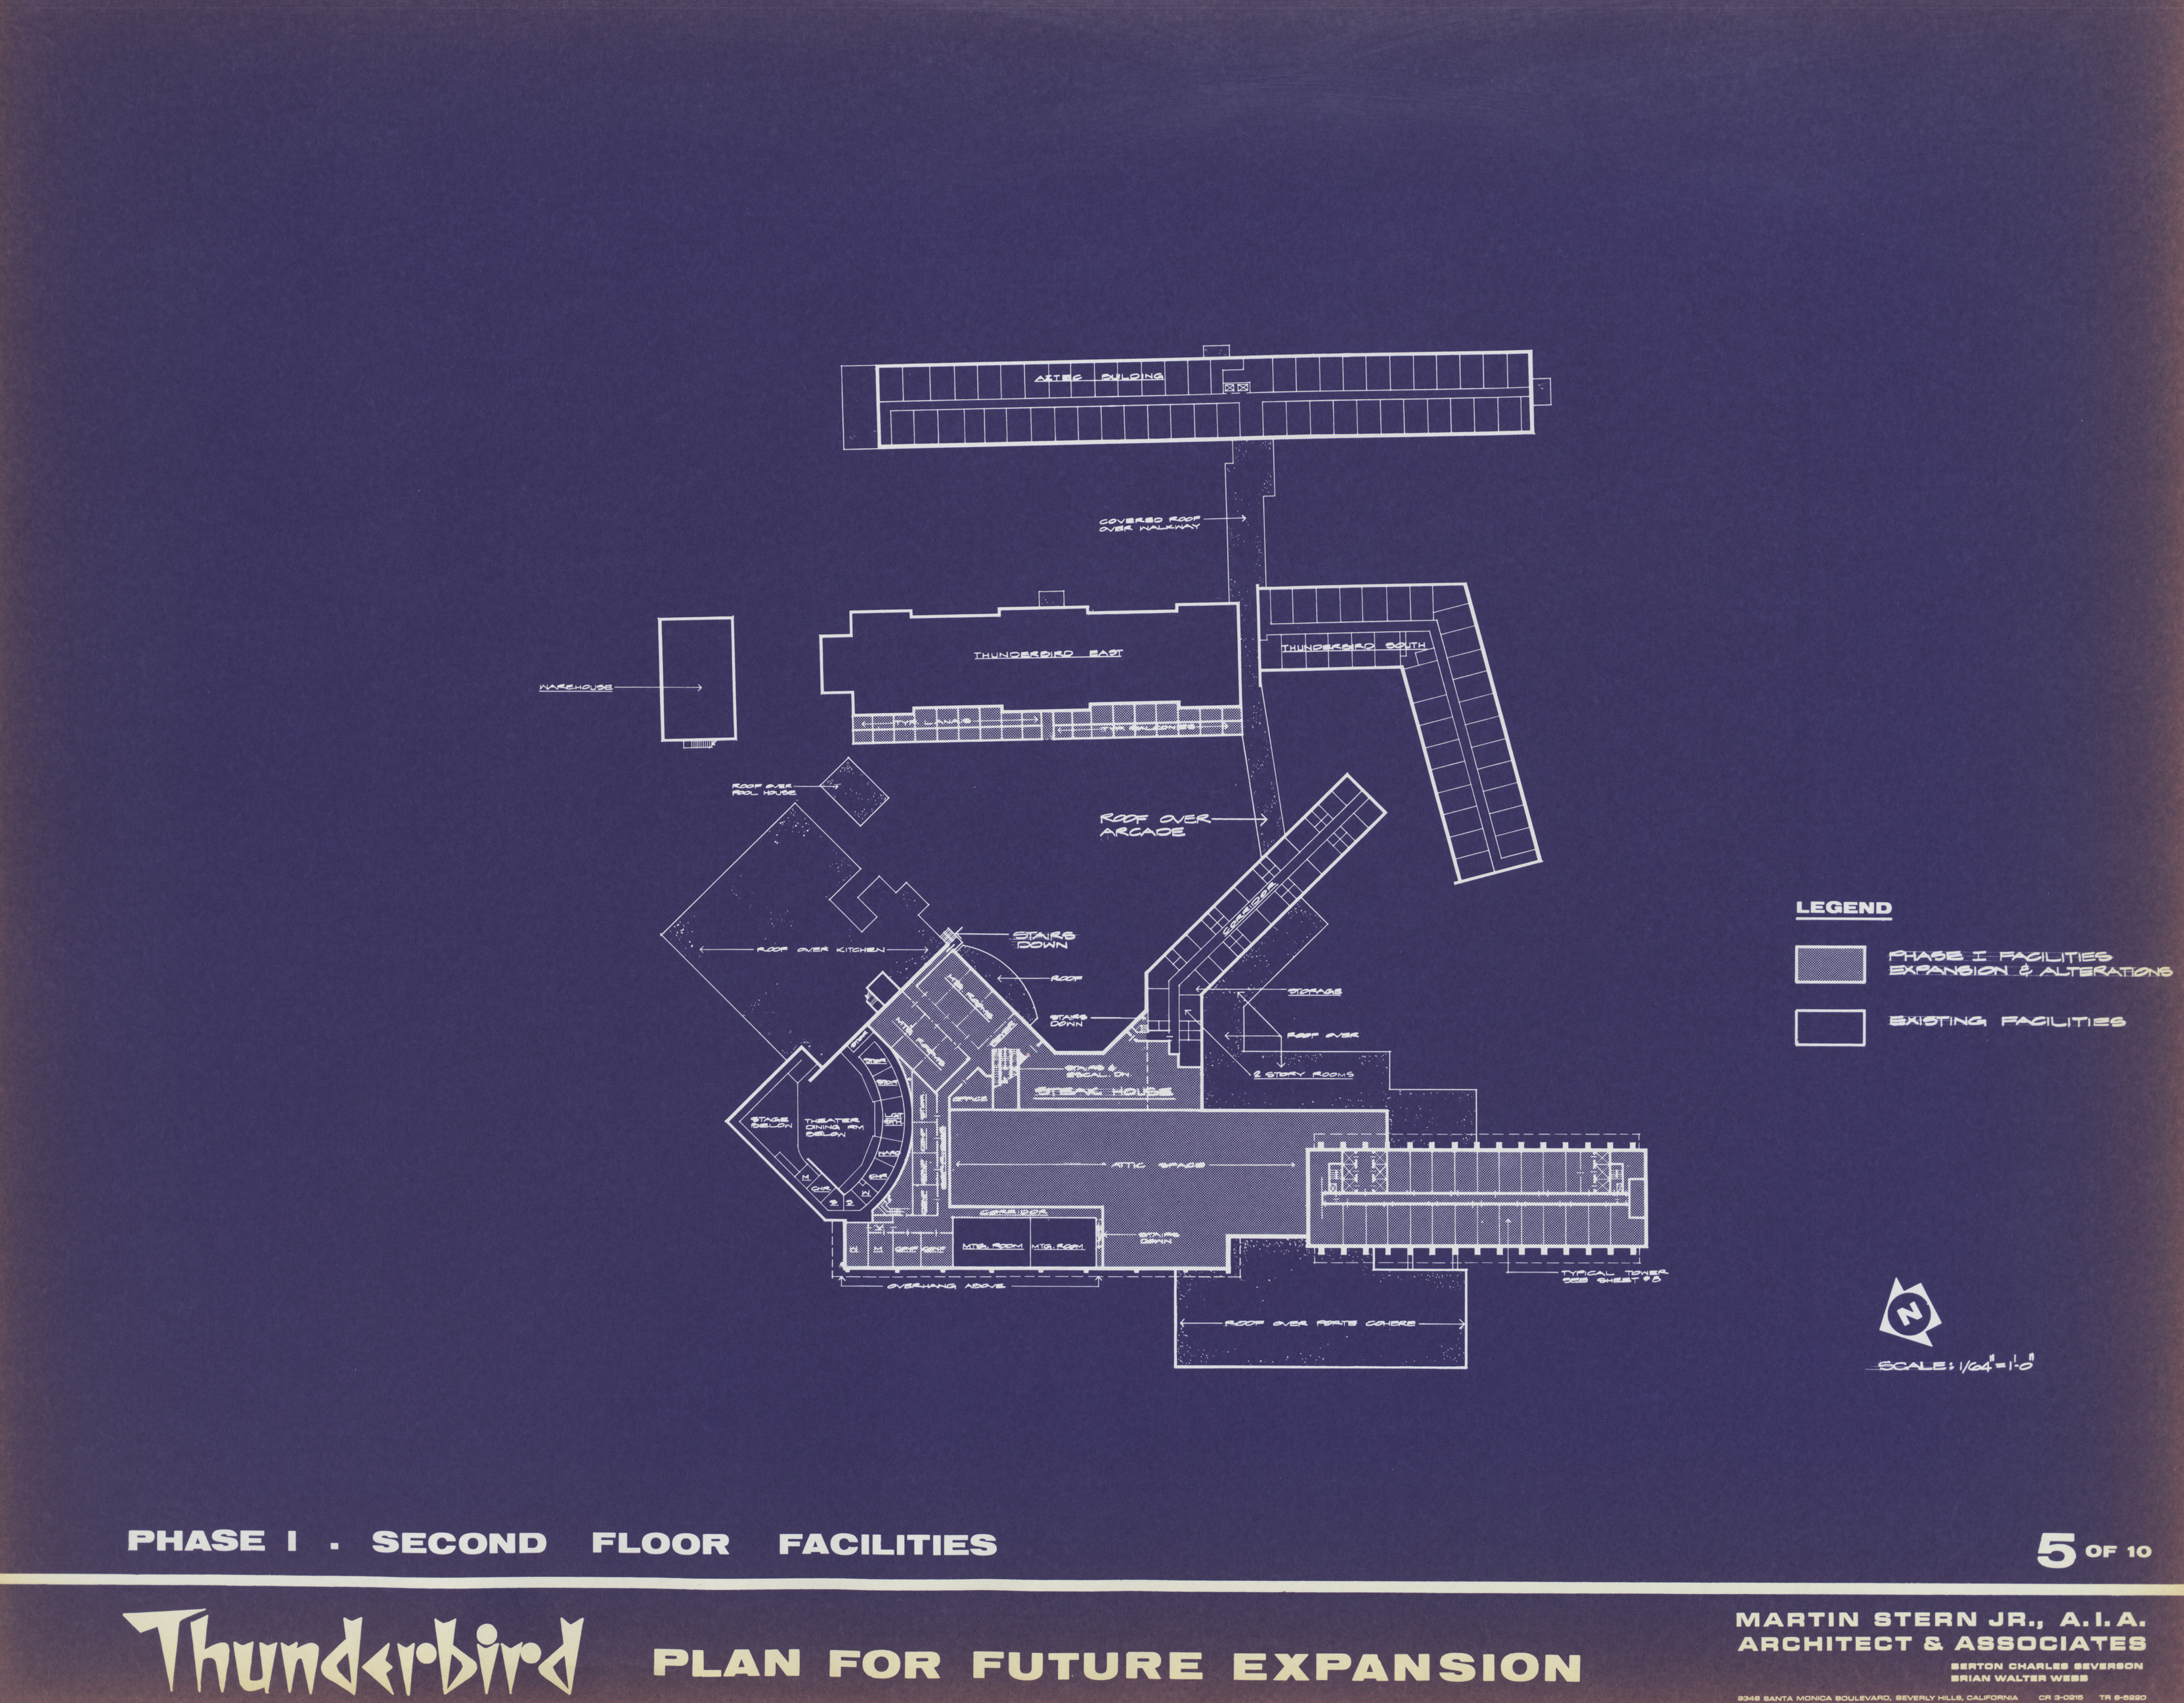 Thunderbird Plan for Future Expansion Proposal, image 5